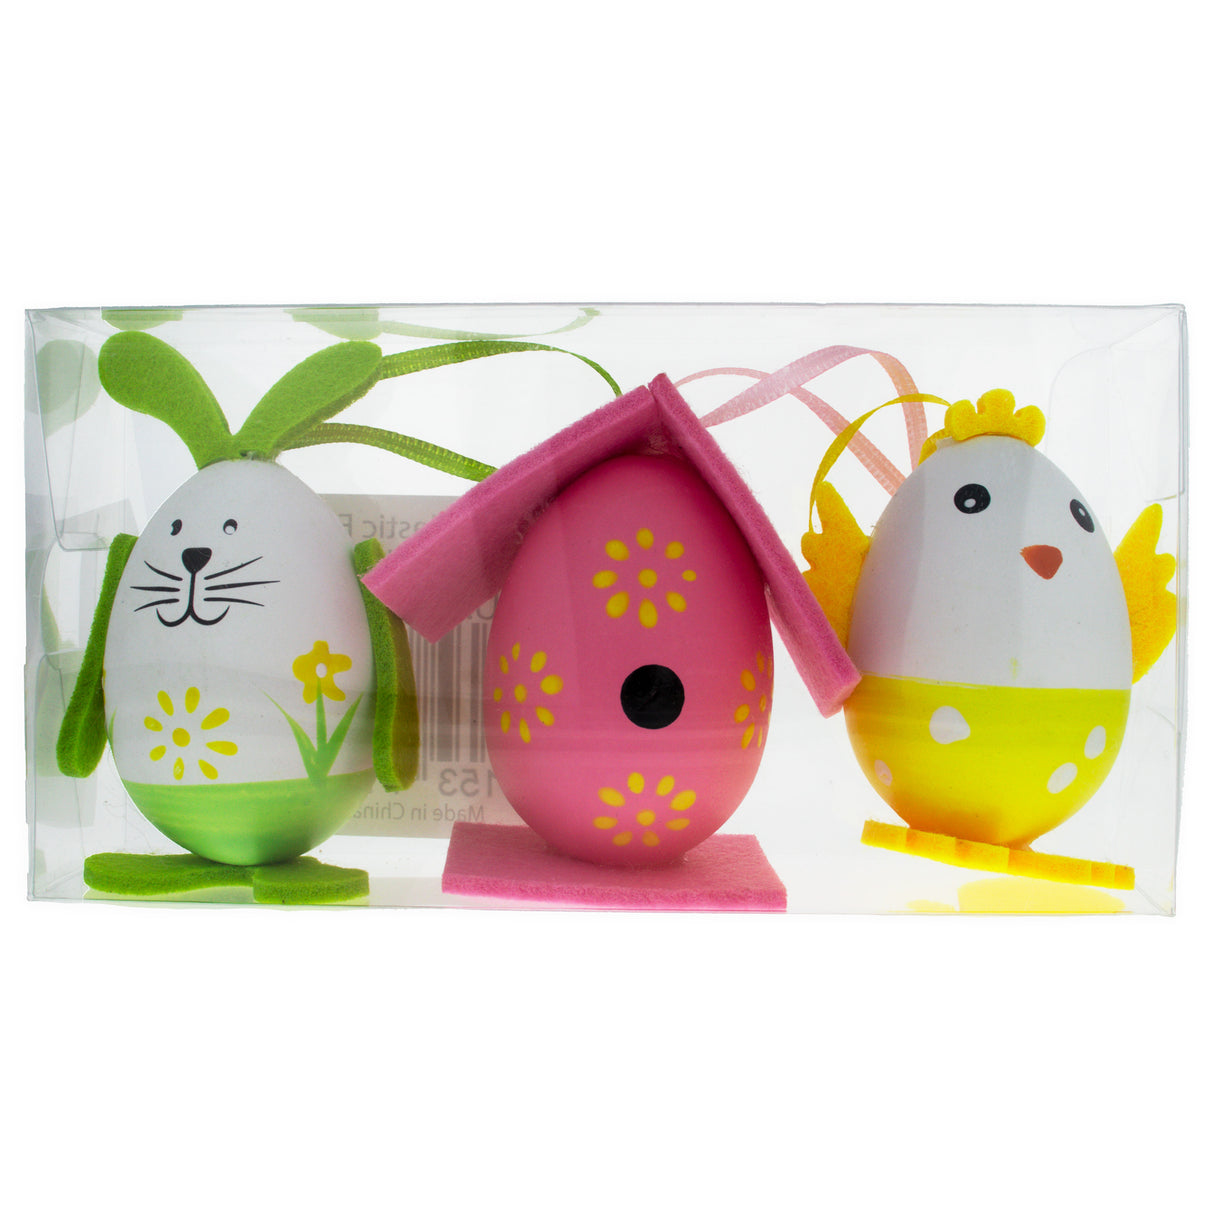 BestPysanky online gift shop sells Easter decoration, miniature Easter egg ornaments, Easter decoration